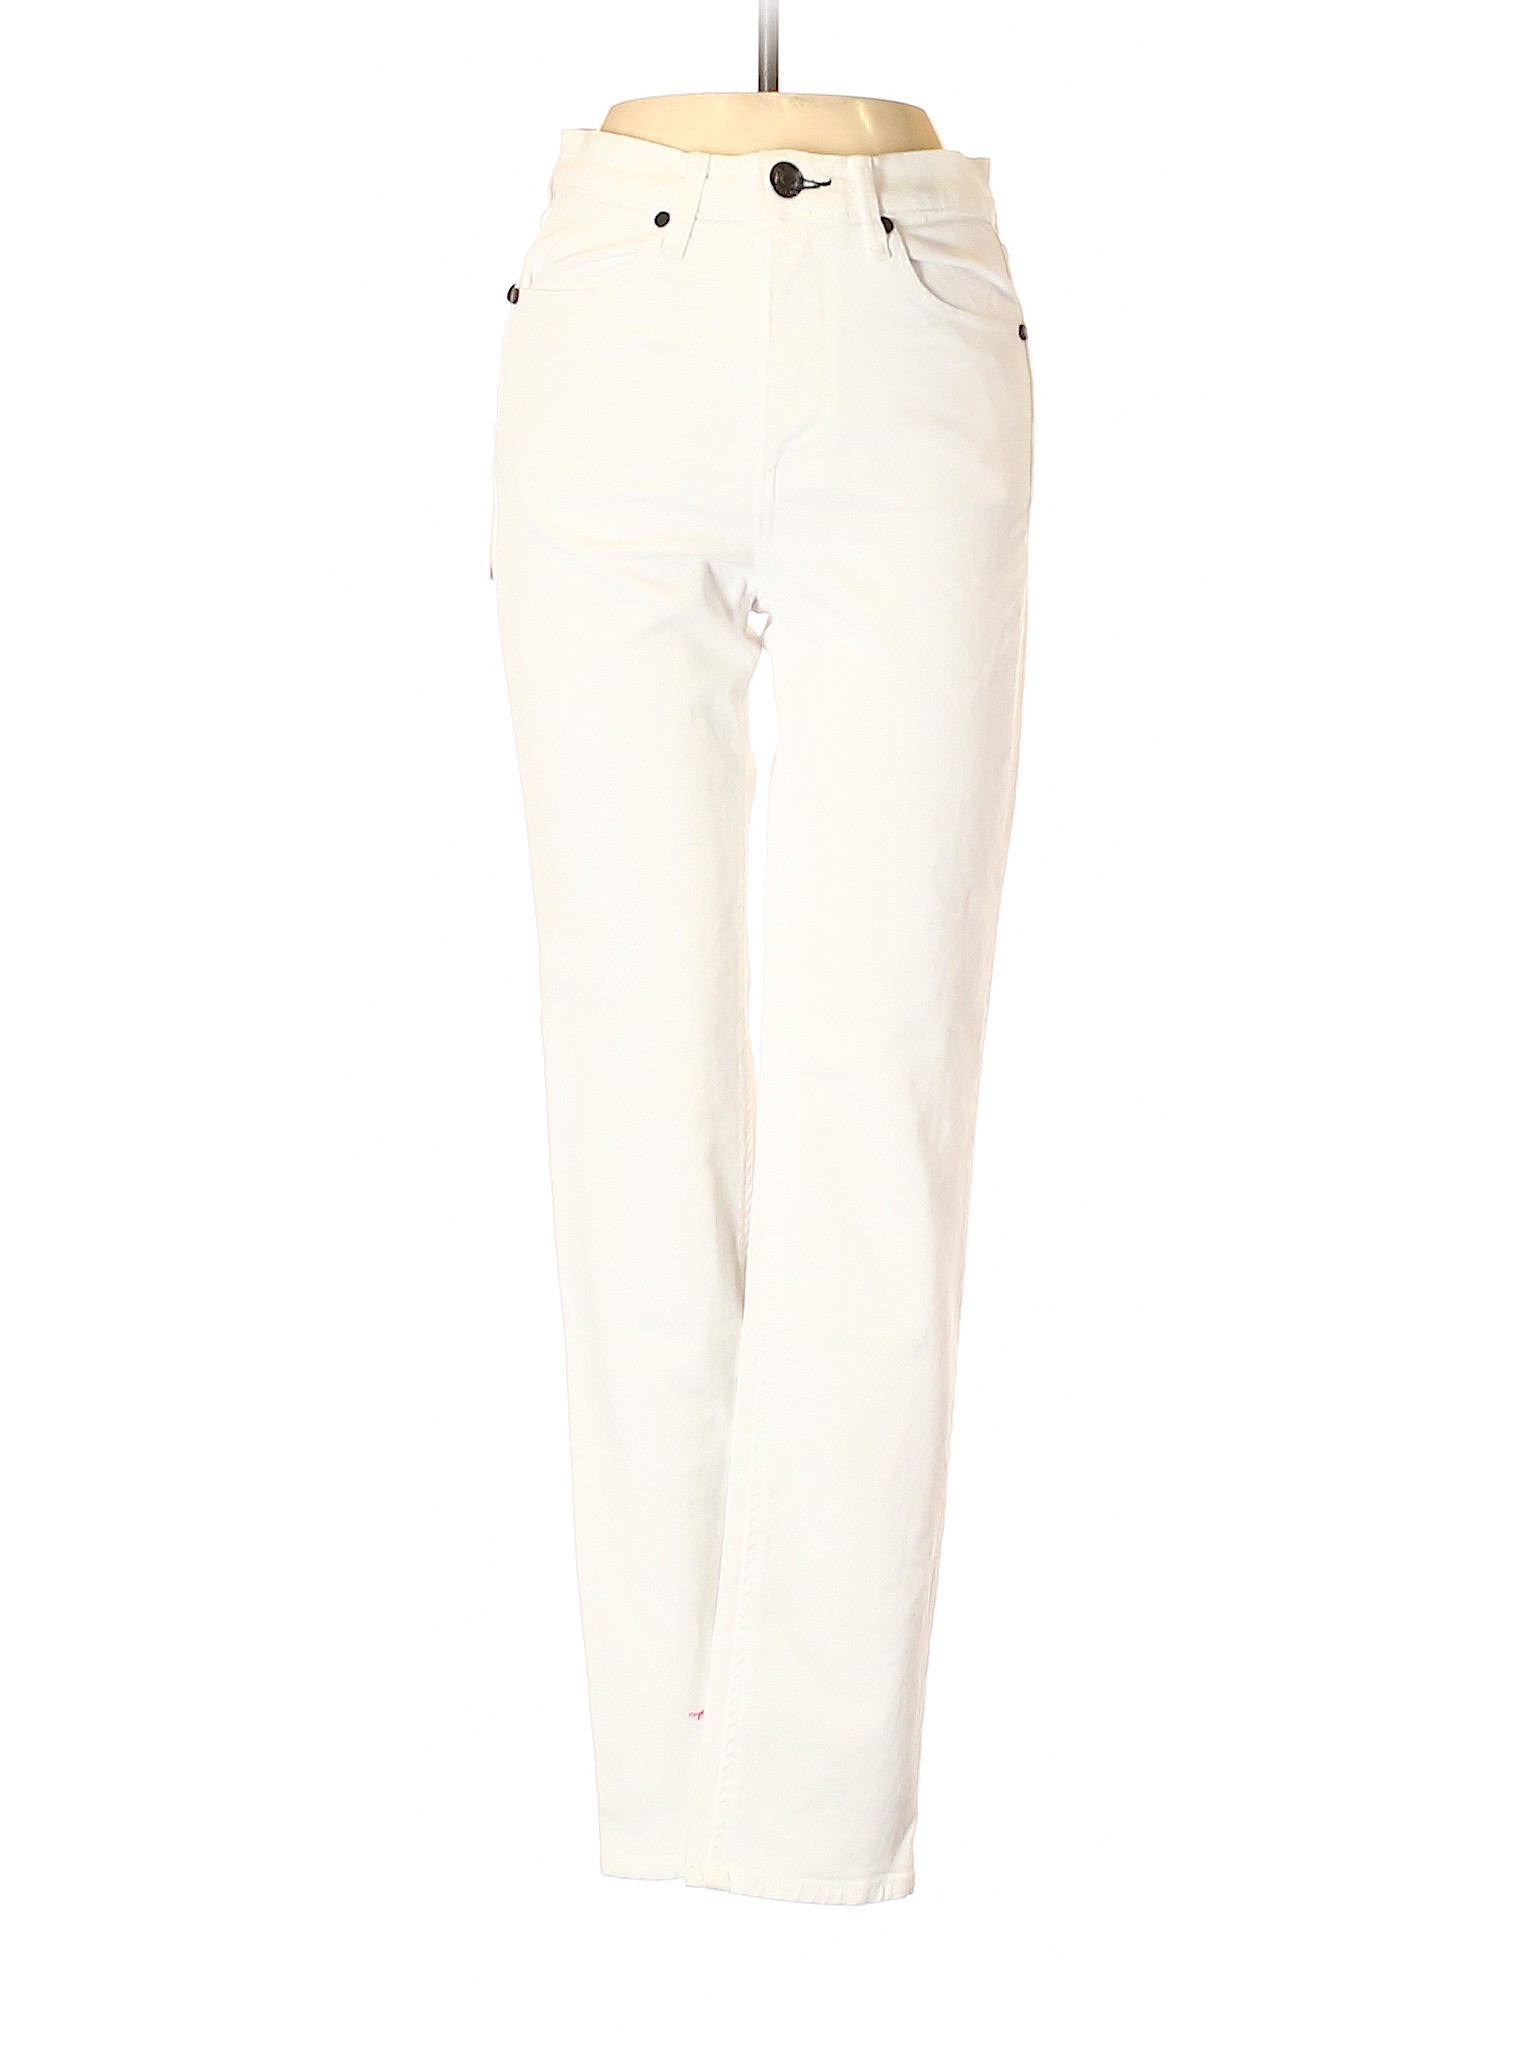 NWT Rag & Bone/JEAN Women White Jeans 24W | eBay